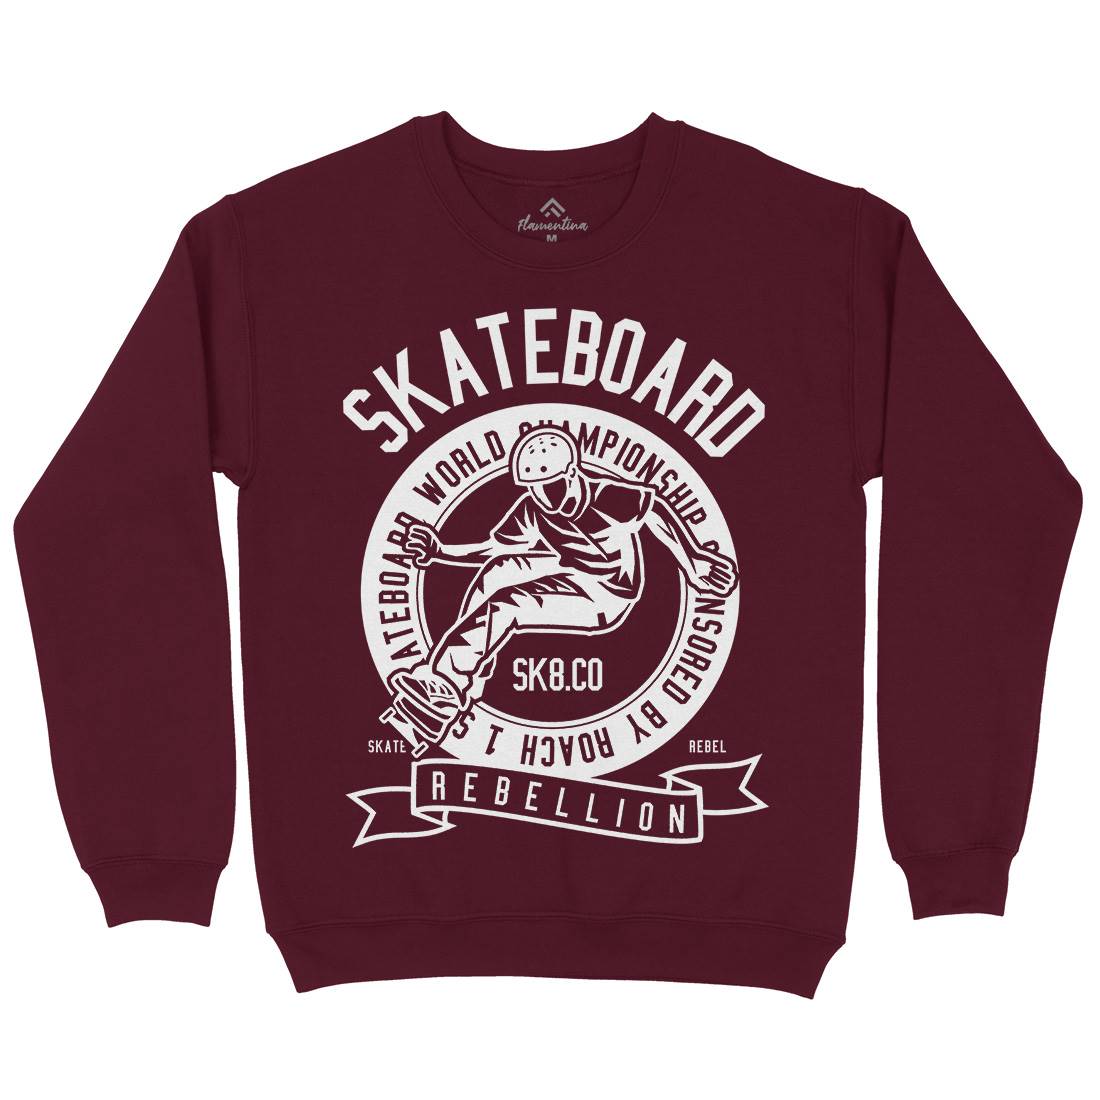 Skateboard Rebellion Kids Crew Neck Sweatshirt Skate B624